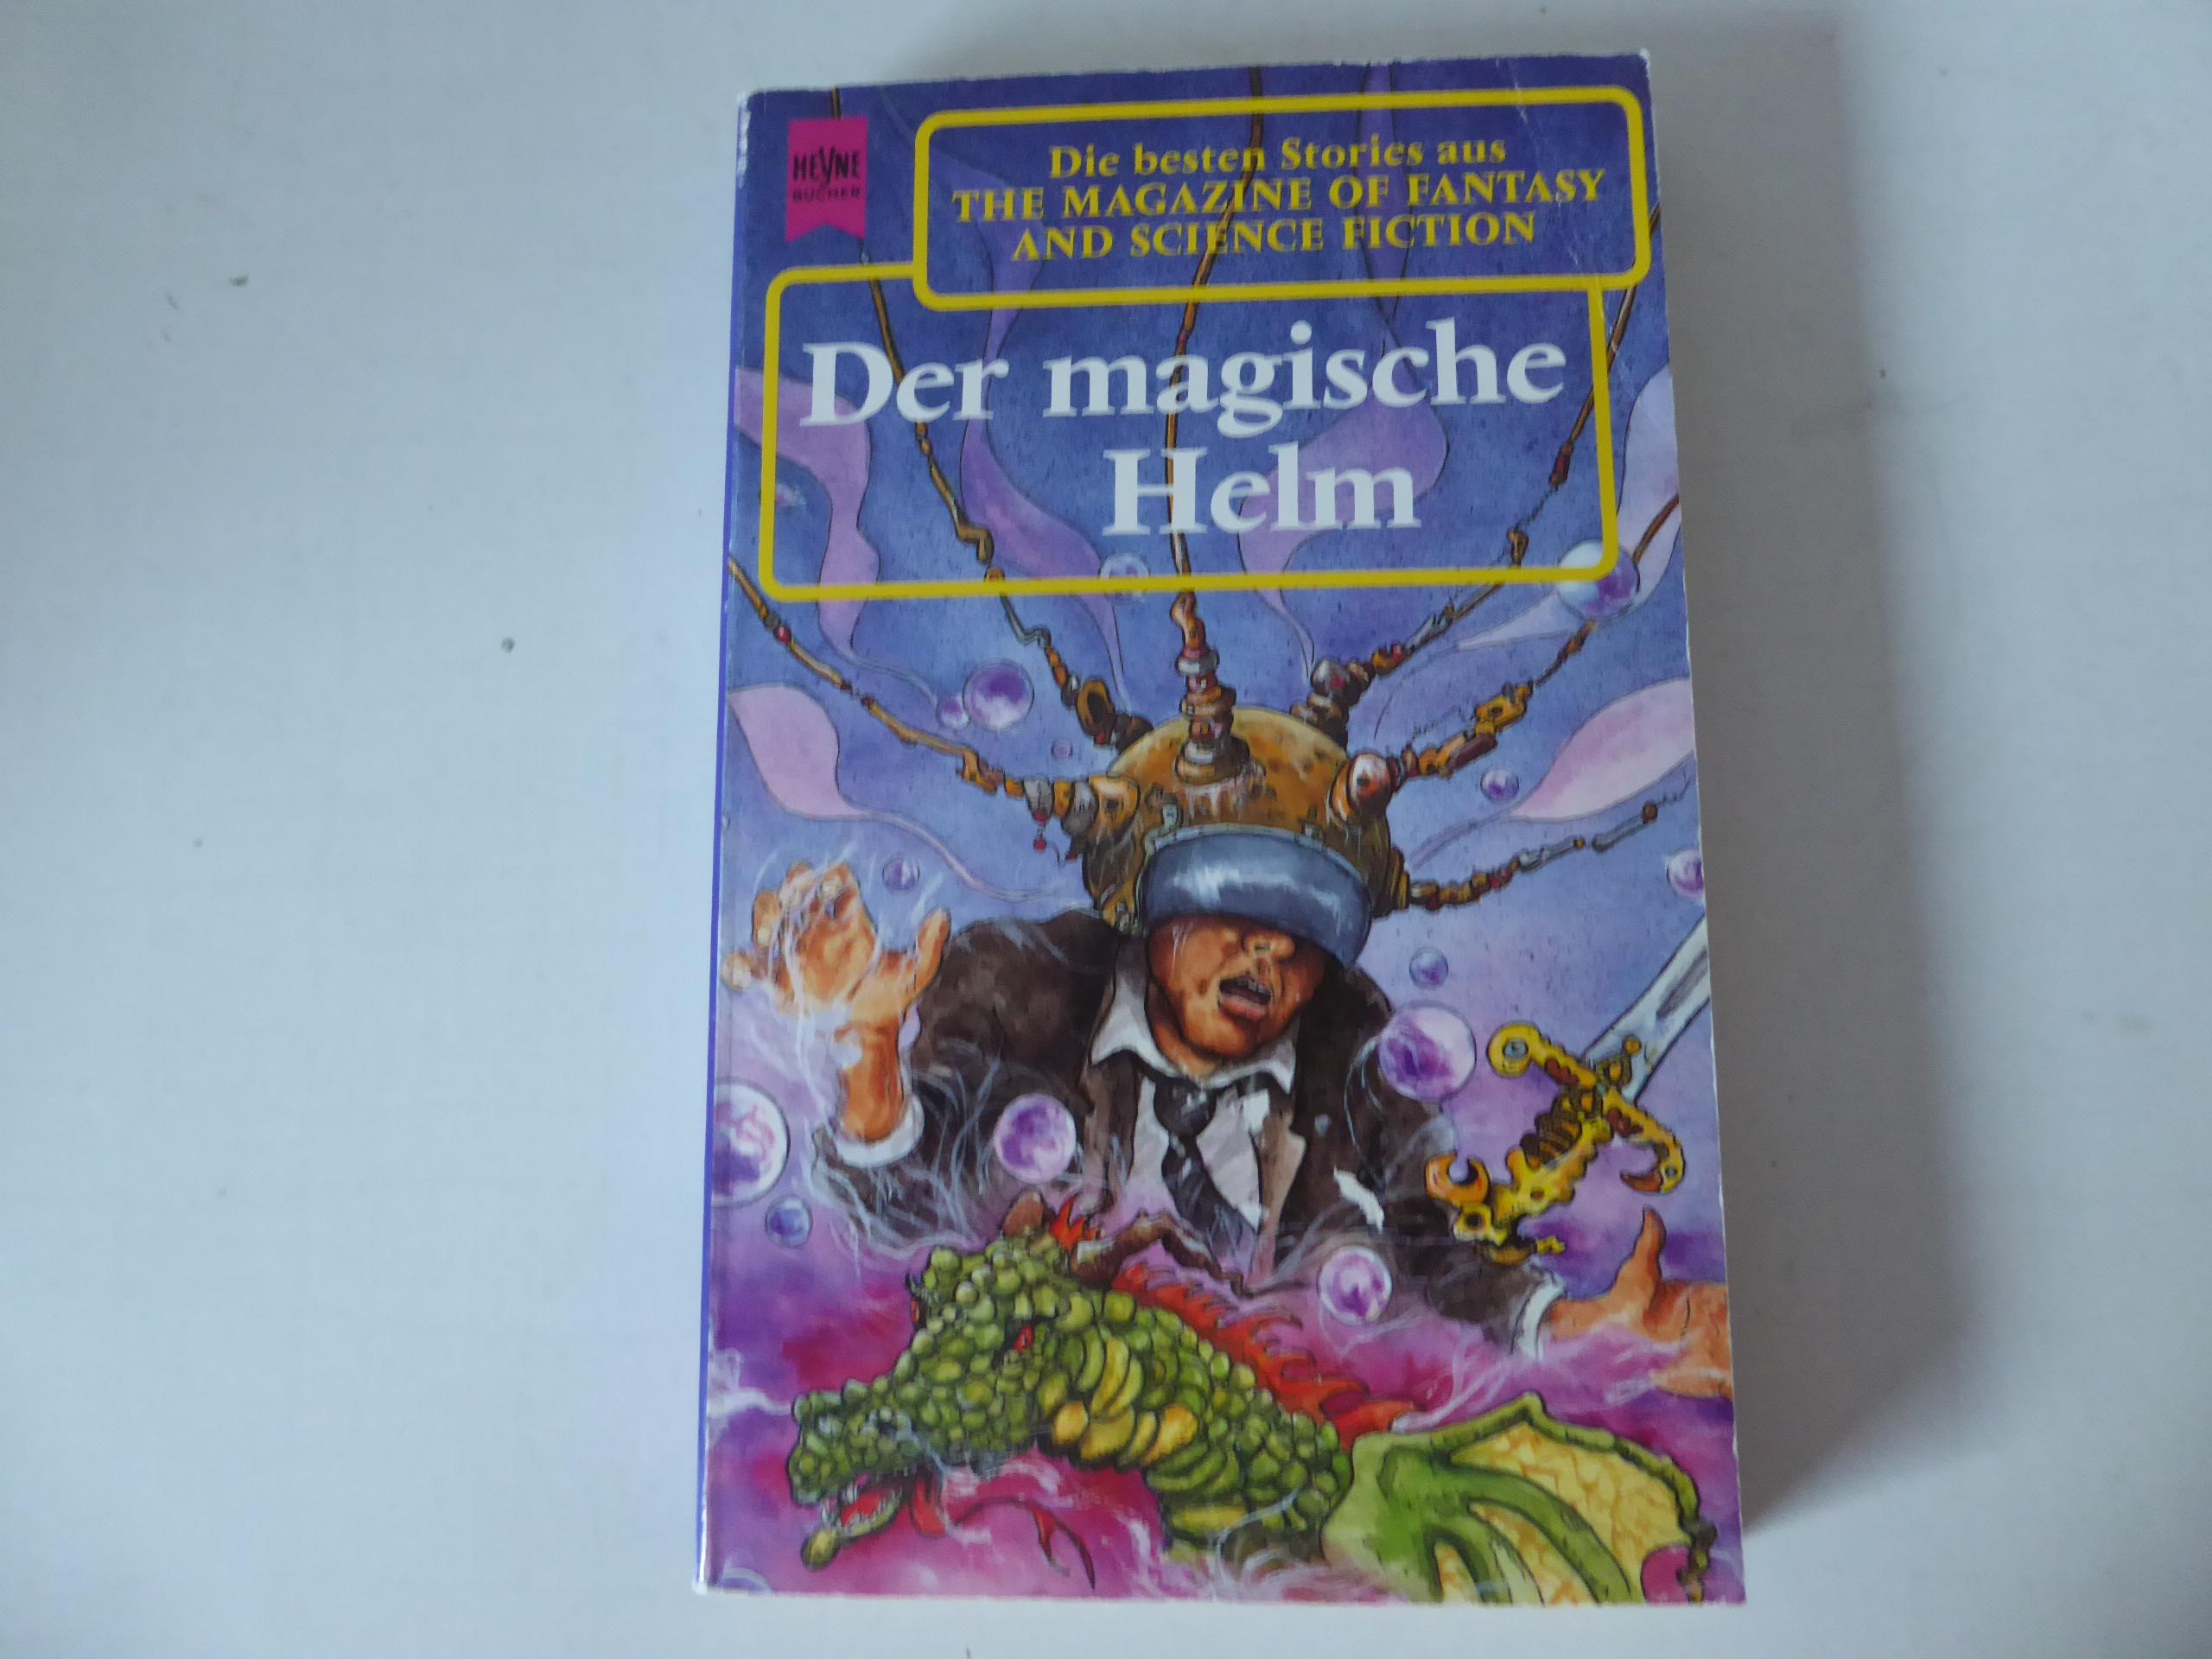 Der magische Helm. Die besten Stories aus The Magazine of Fantasy and Science Fiction 84. Folge. TB - Ronald M. Hahn, Wolfgang Jeschke (Hg.)